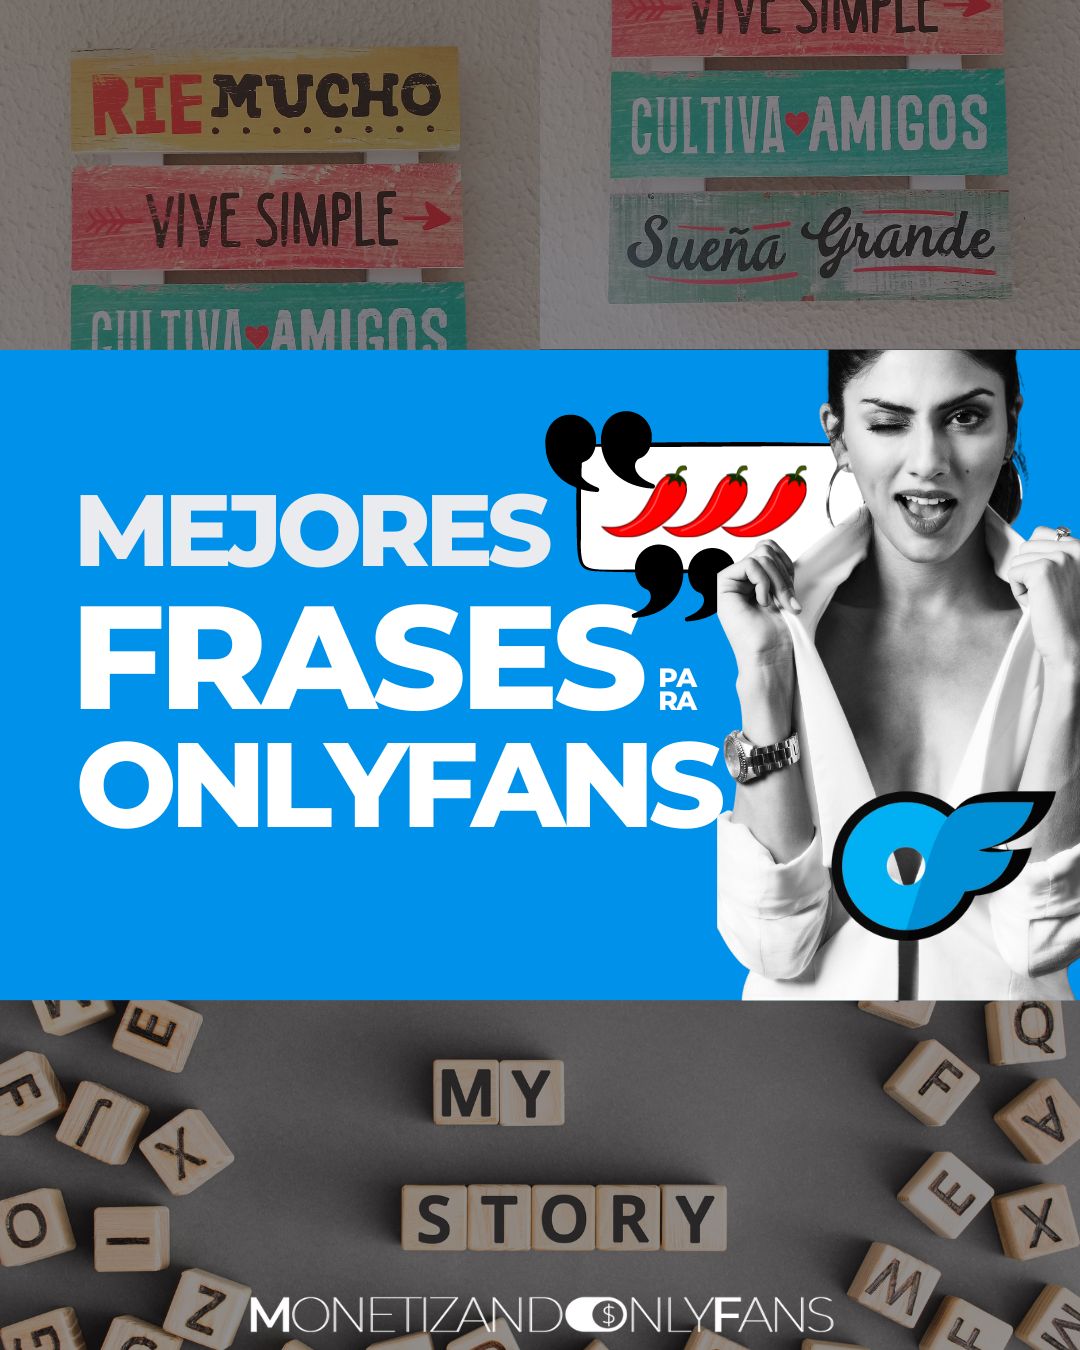 Frases para OnlyFans en tus post: 50 ideas y ejemplos